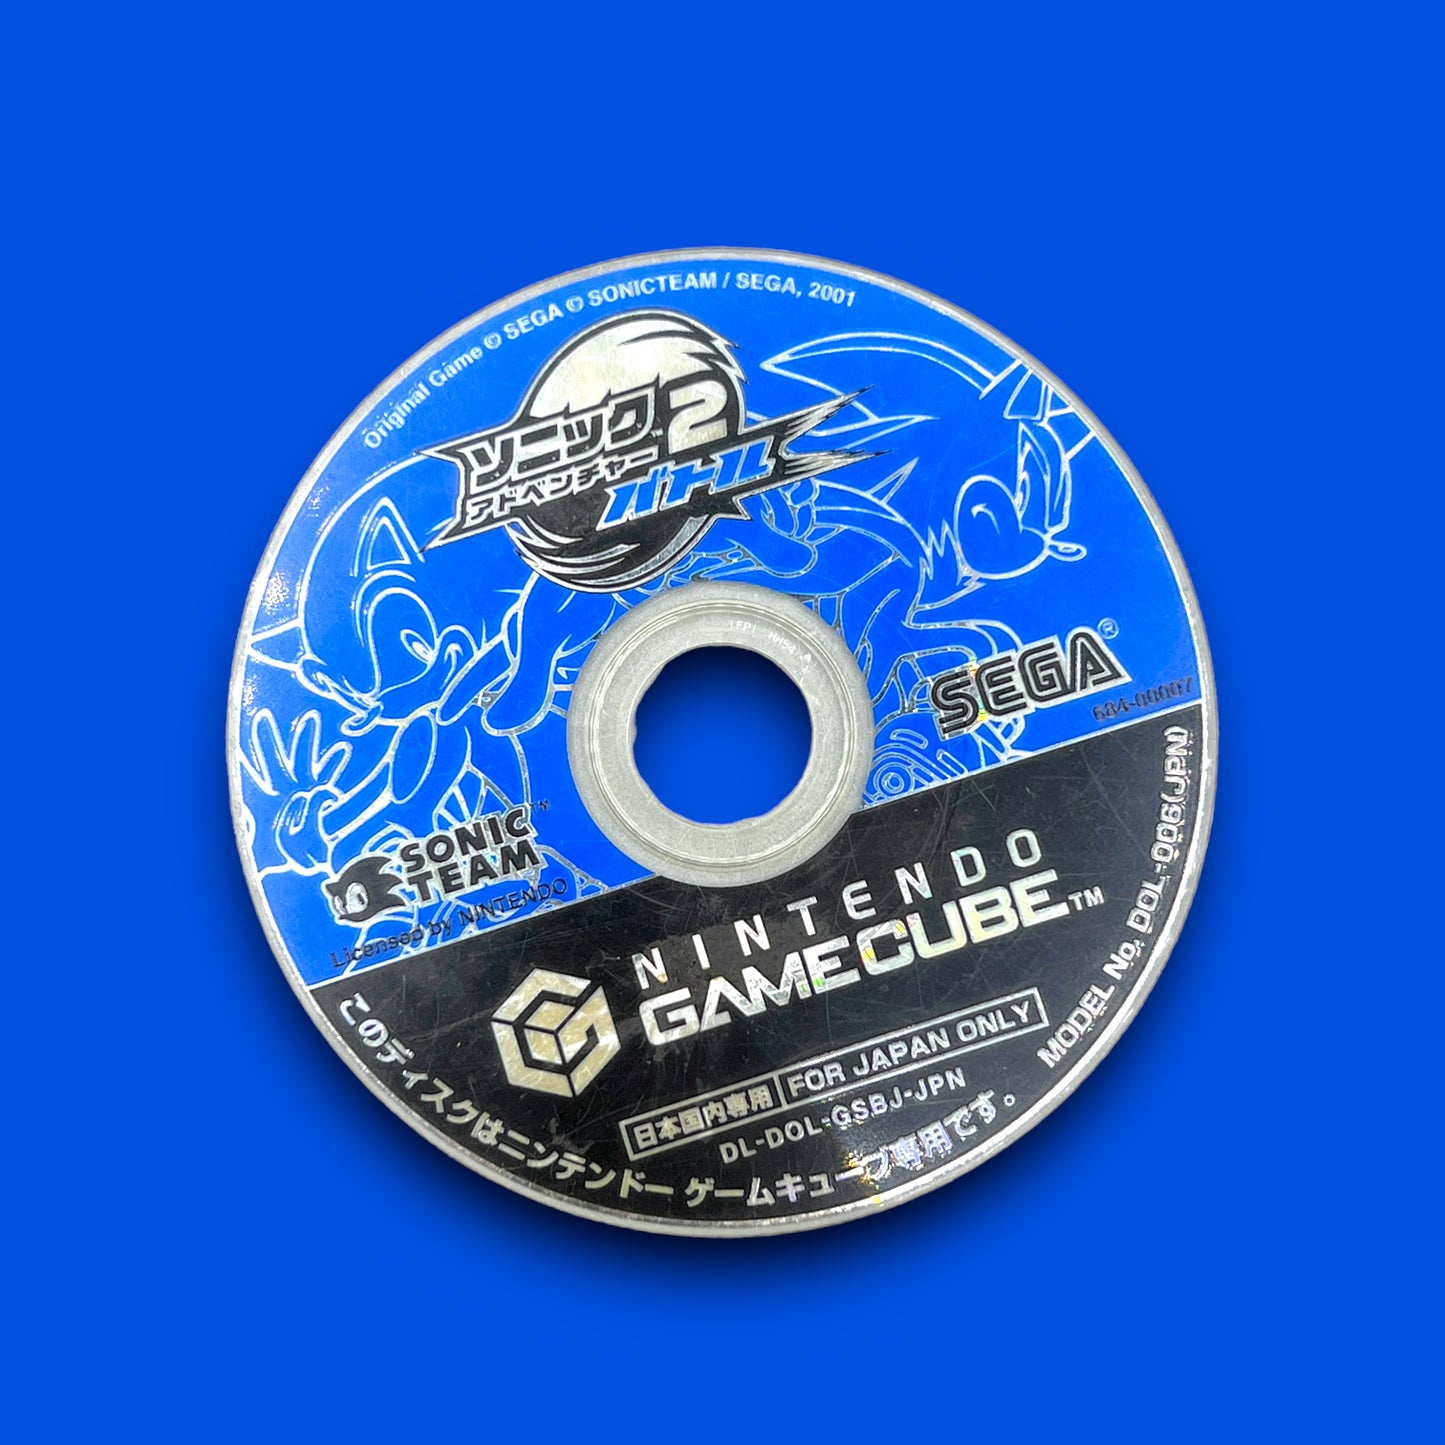 Sonic Adventure 2: Battle -  ソニックアドベンチャー2 バトル (NTSC-J, Nintendo GameCube, 2001)